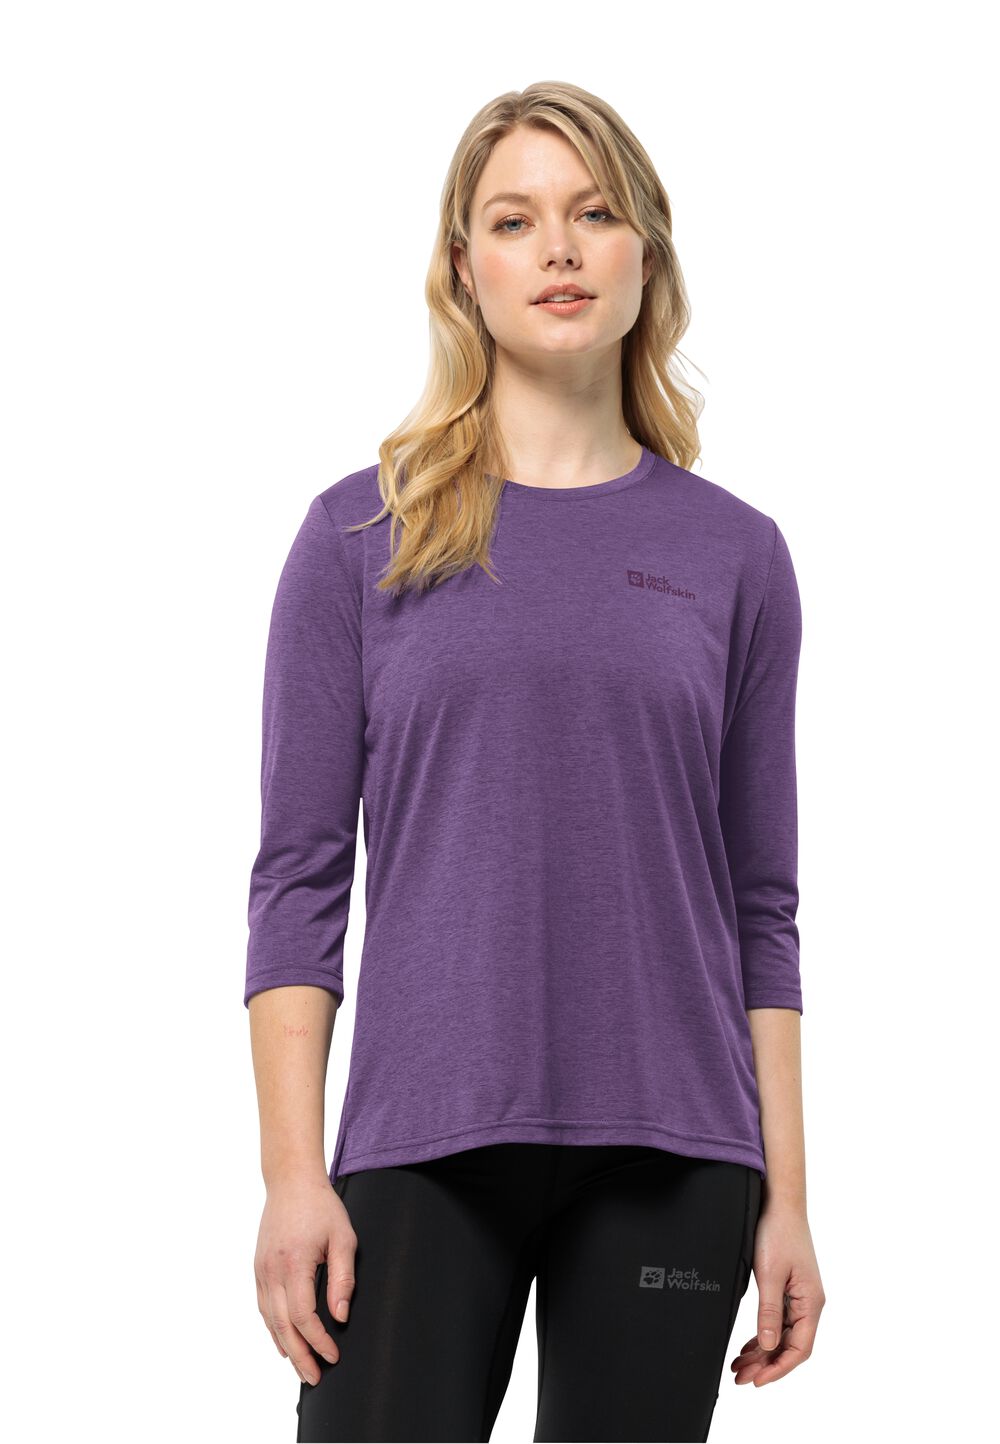 Jack Wolfskin Crosstrail 3 4 T-Shirt Women Functioneel shirt Dames S ultraviolet